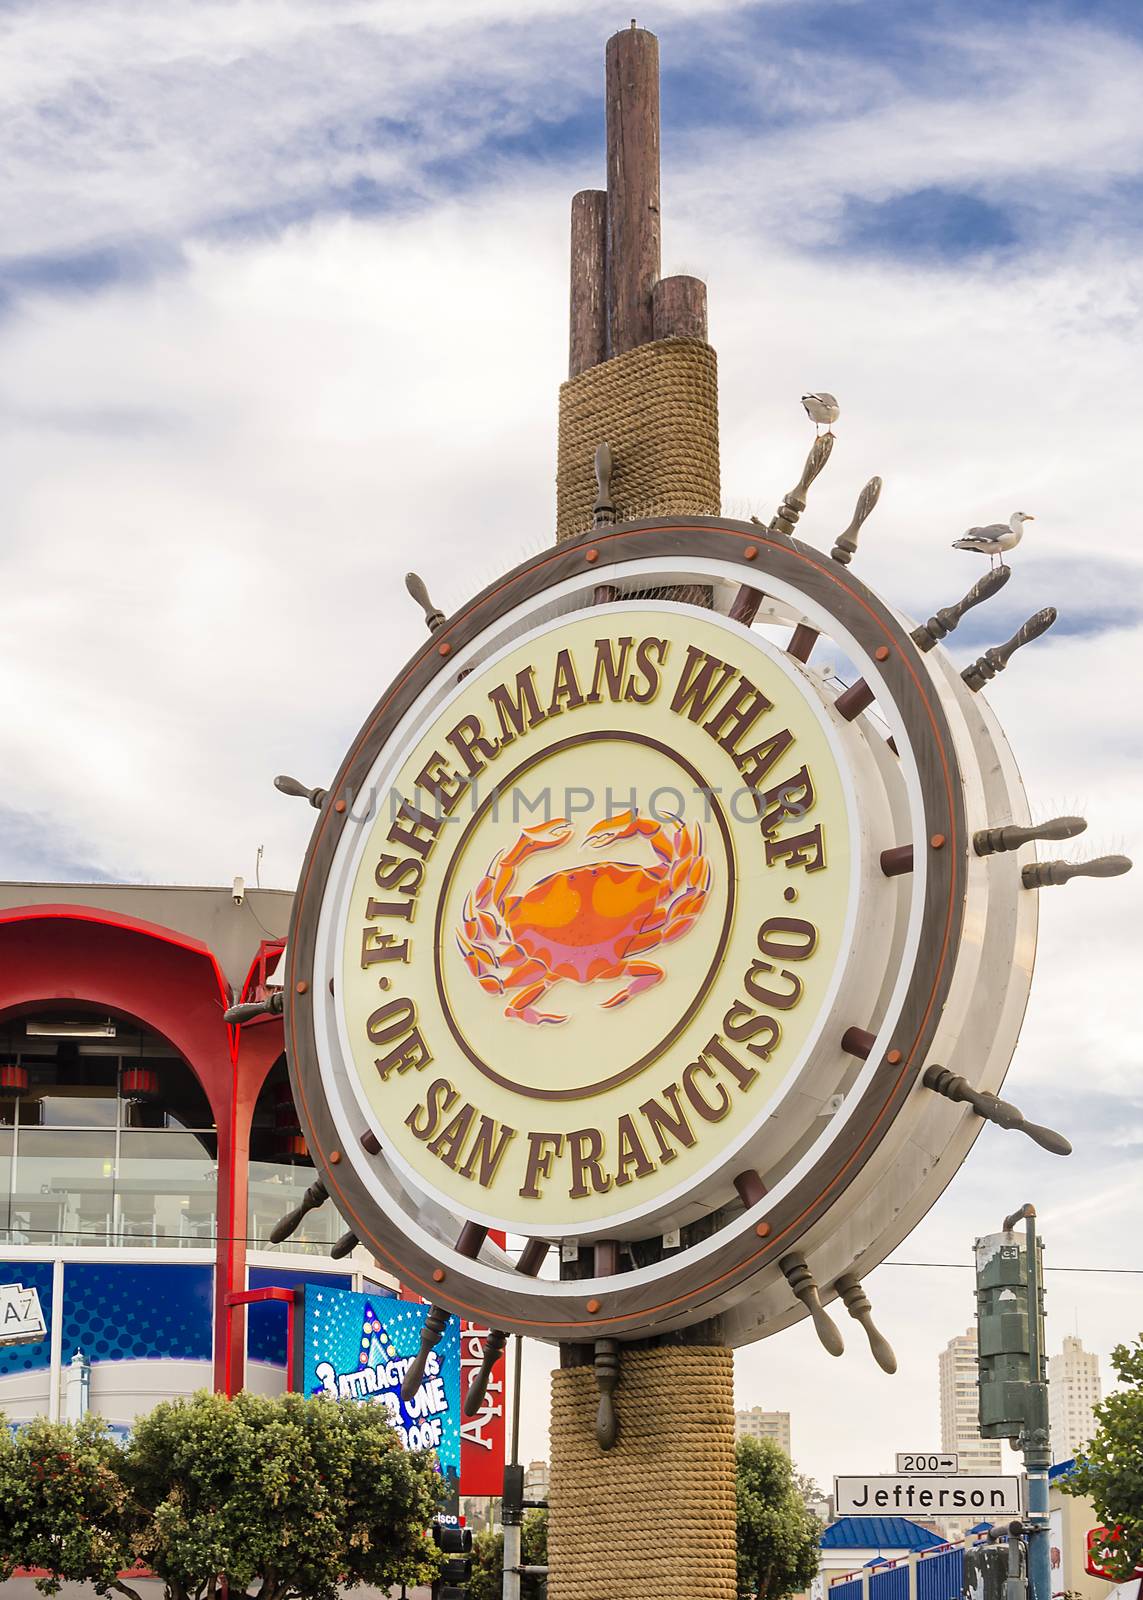 Fishermans Wharf of San Francisco by rarrarorro